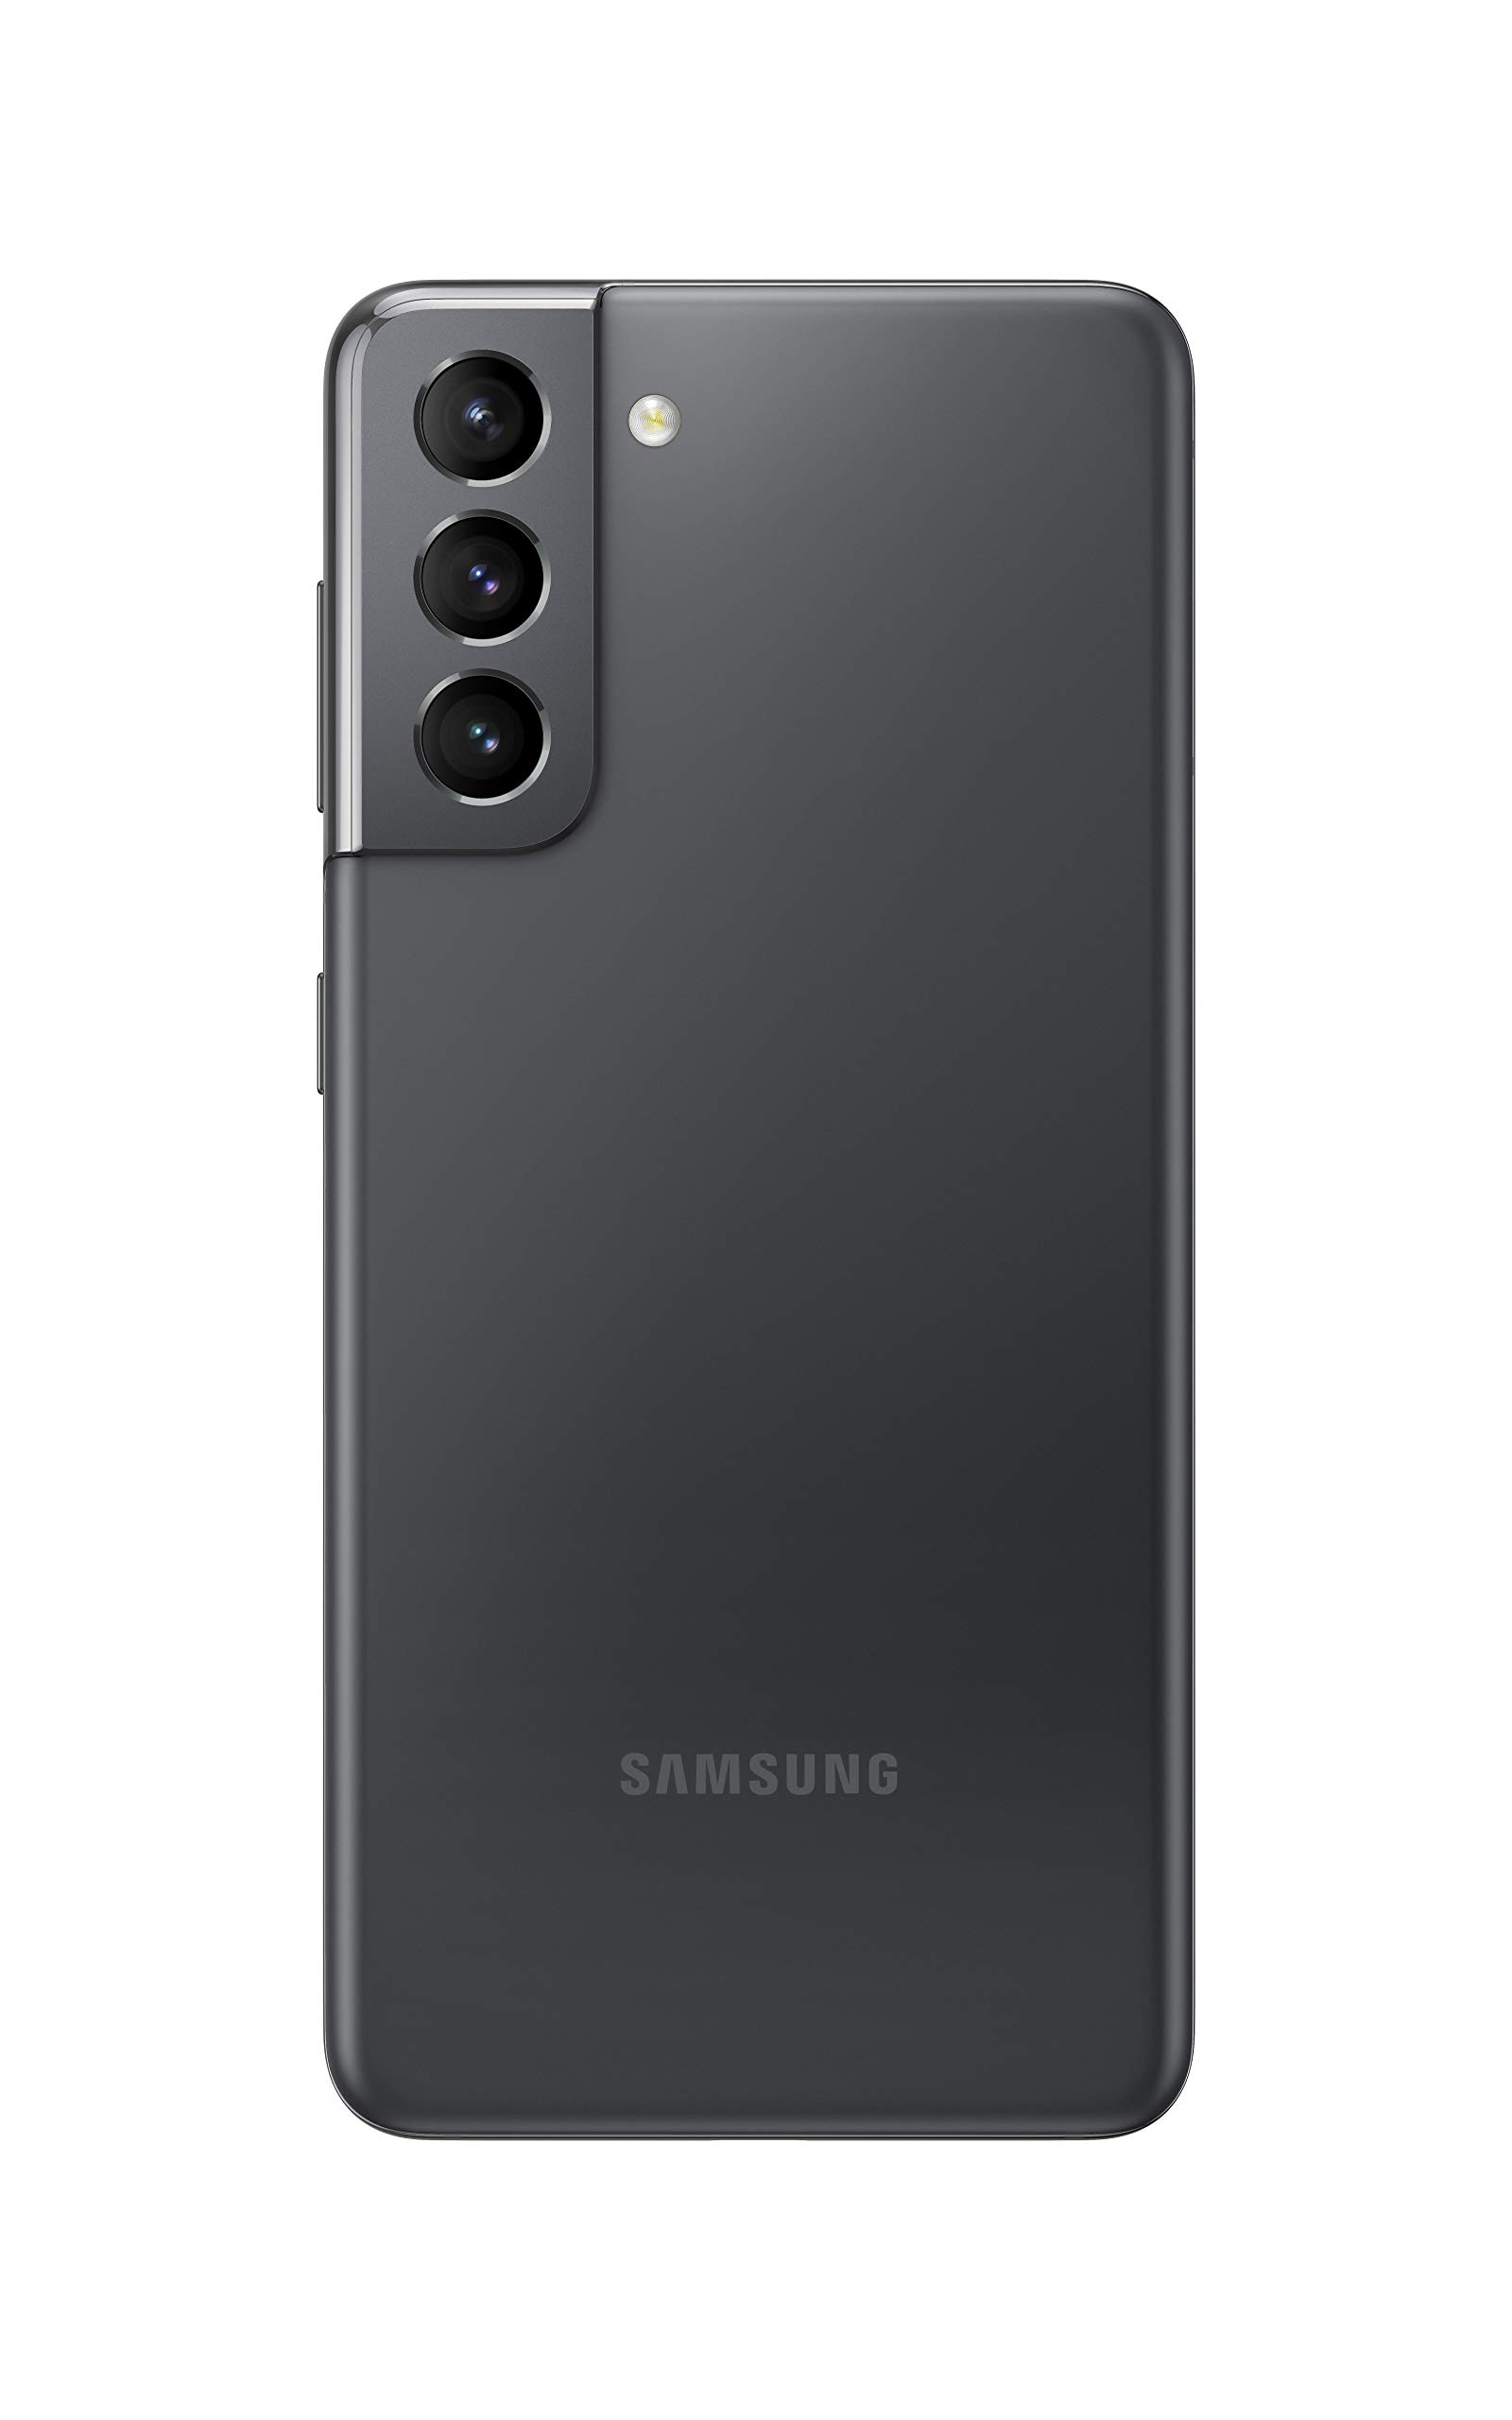 Samsung Electronics Galaxy S21 5G | Factory Unlocked Android Cell Phone | US Version Smartphone | Pro-Grade Camera, 8K Video, 64MP High Res | 128GB, Phantom Gray (SM-G991UZAAXAA)